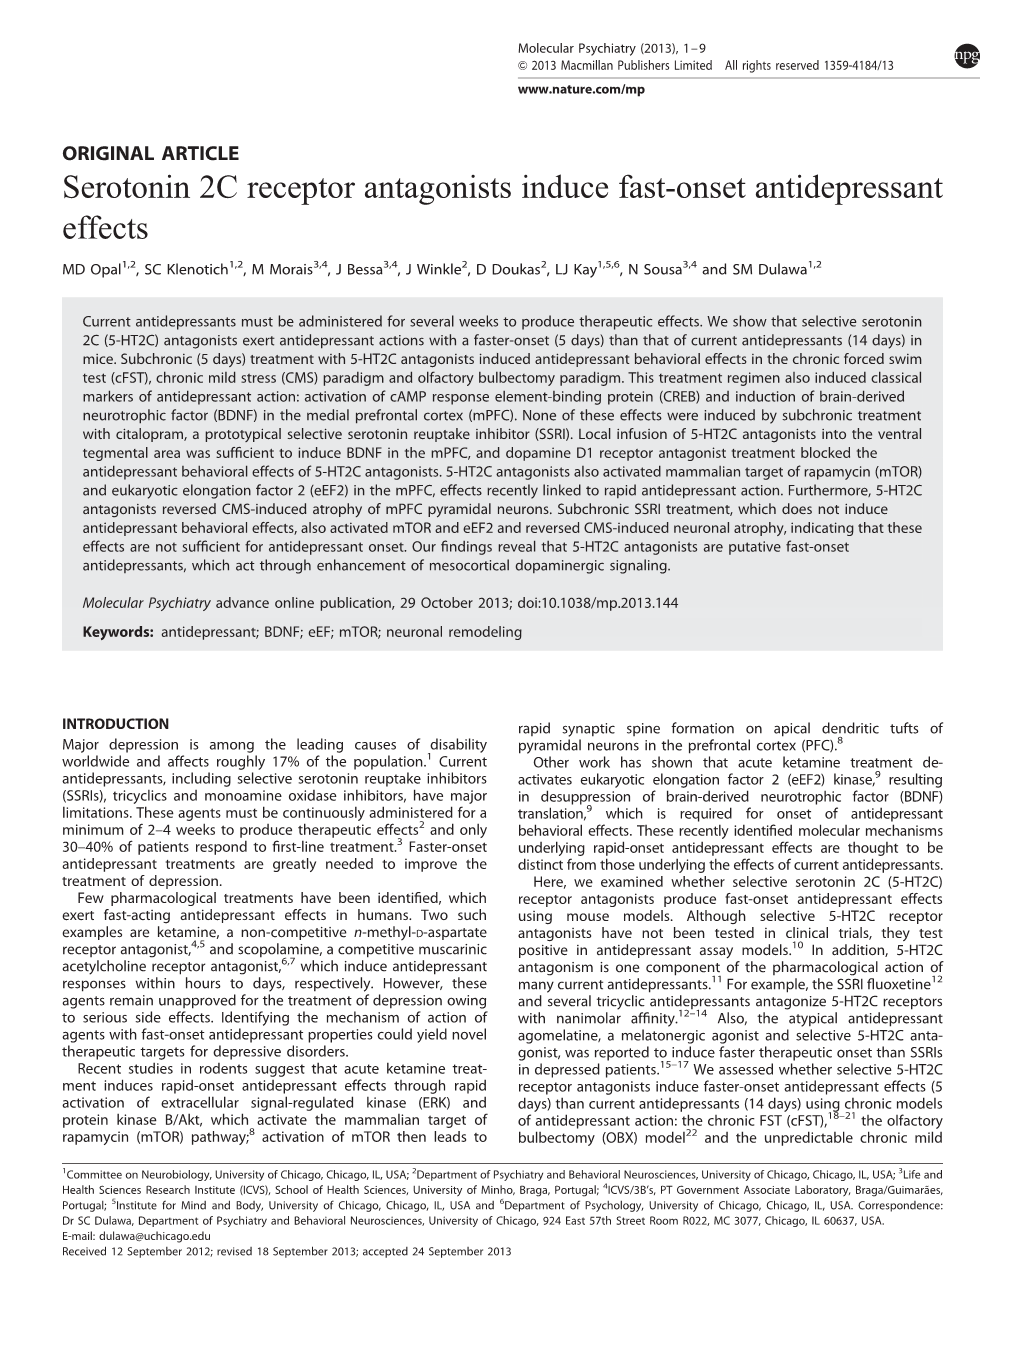 Serotonin 2C Receptor Antagonists Induce Fast-Onset Antidepressant Effects